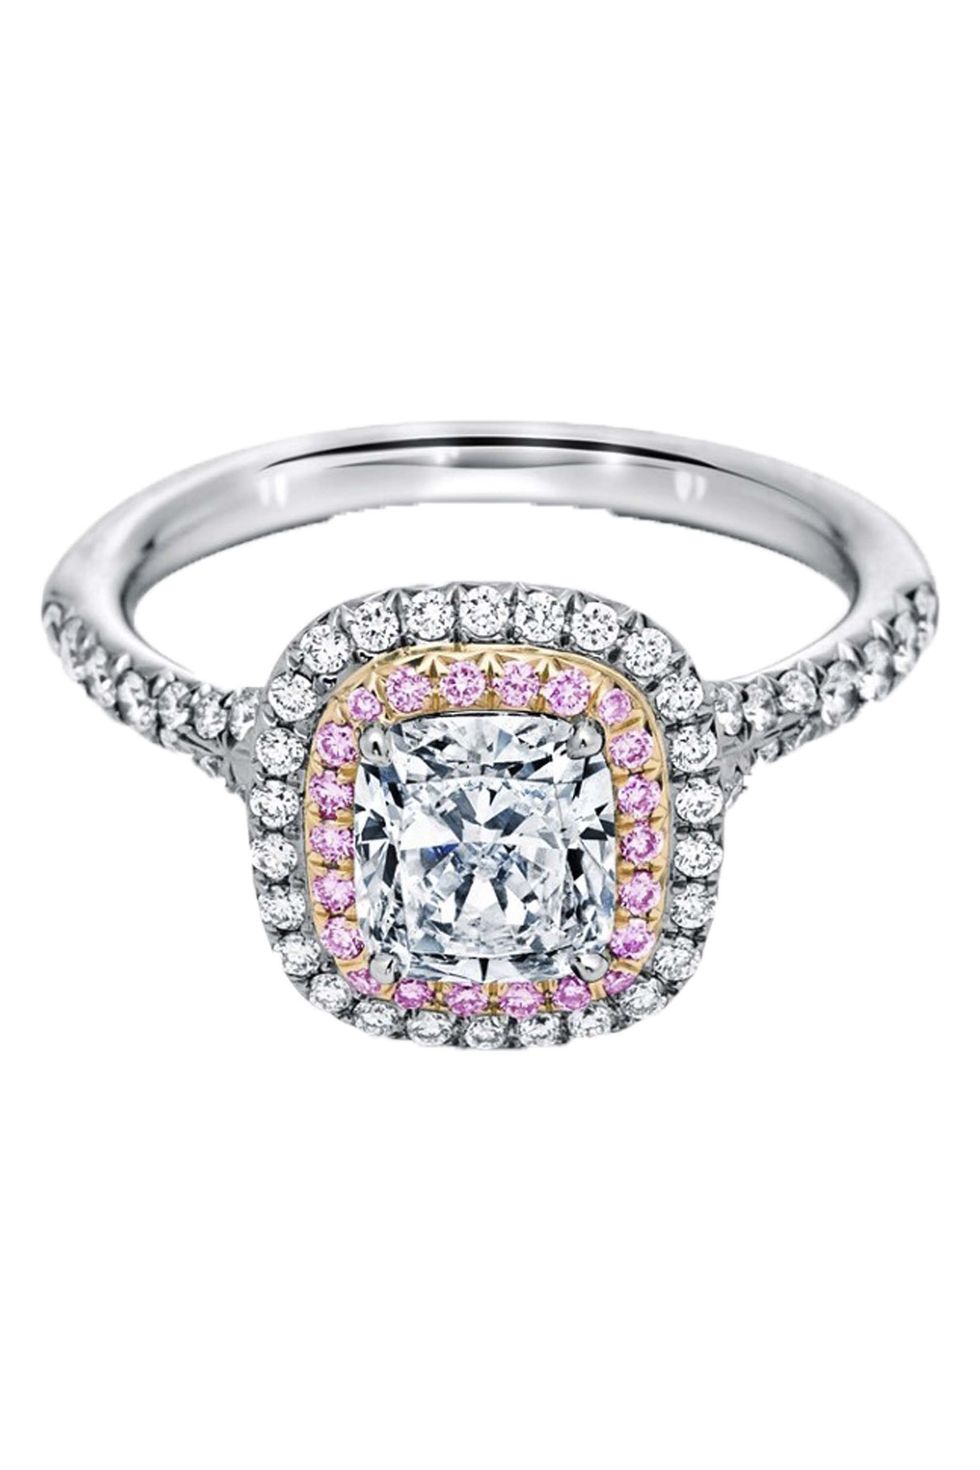 Tiffany pink engagement ring